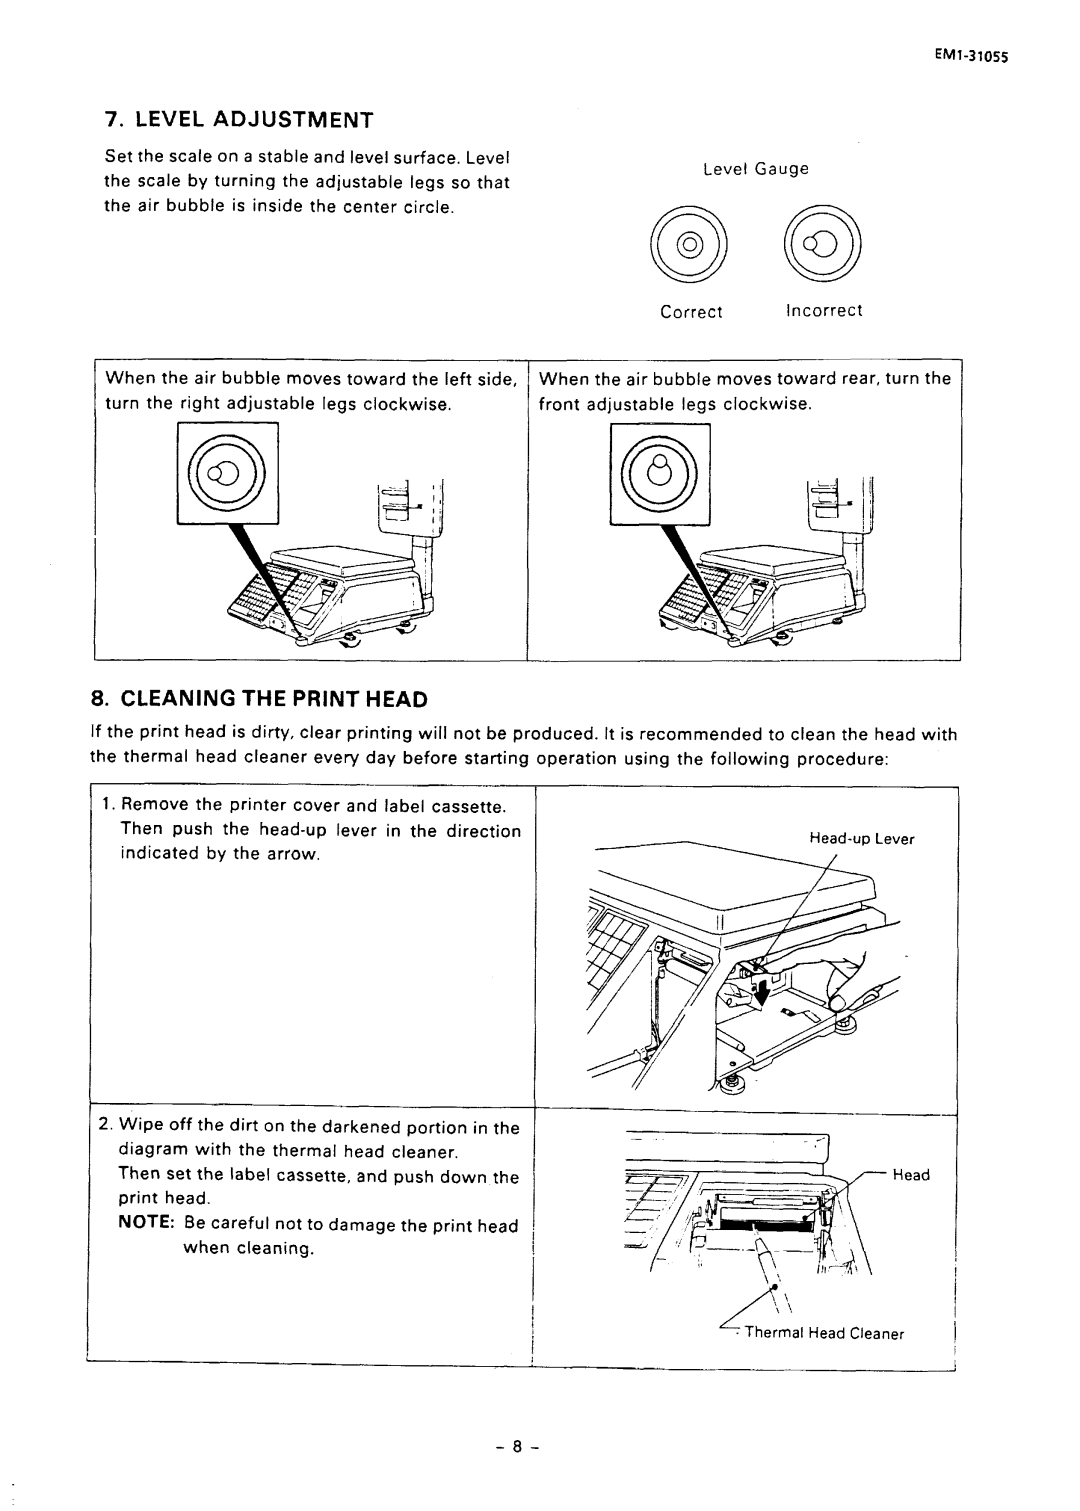 Toshiba EMl-31055, SL66 SERIES manual Level Adjustment, Cleaning The Print Head 